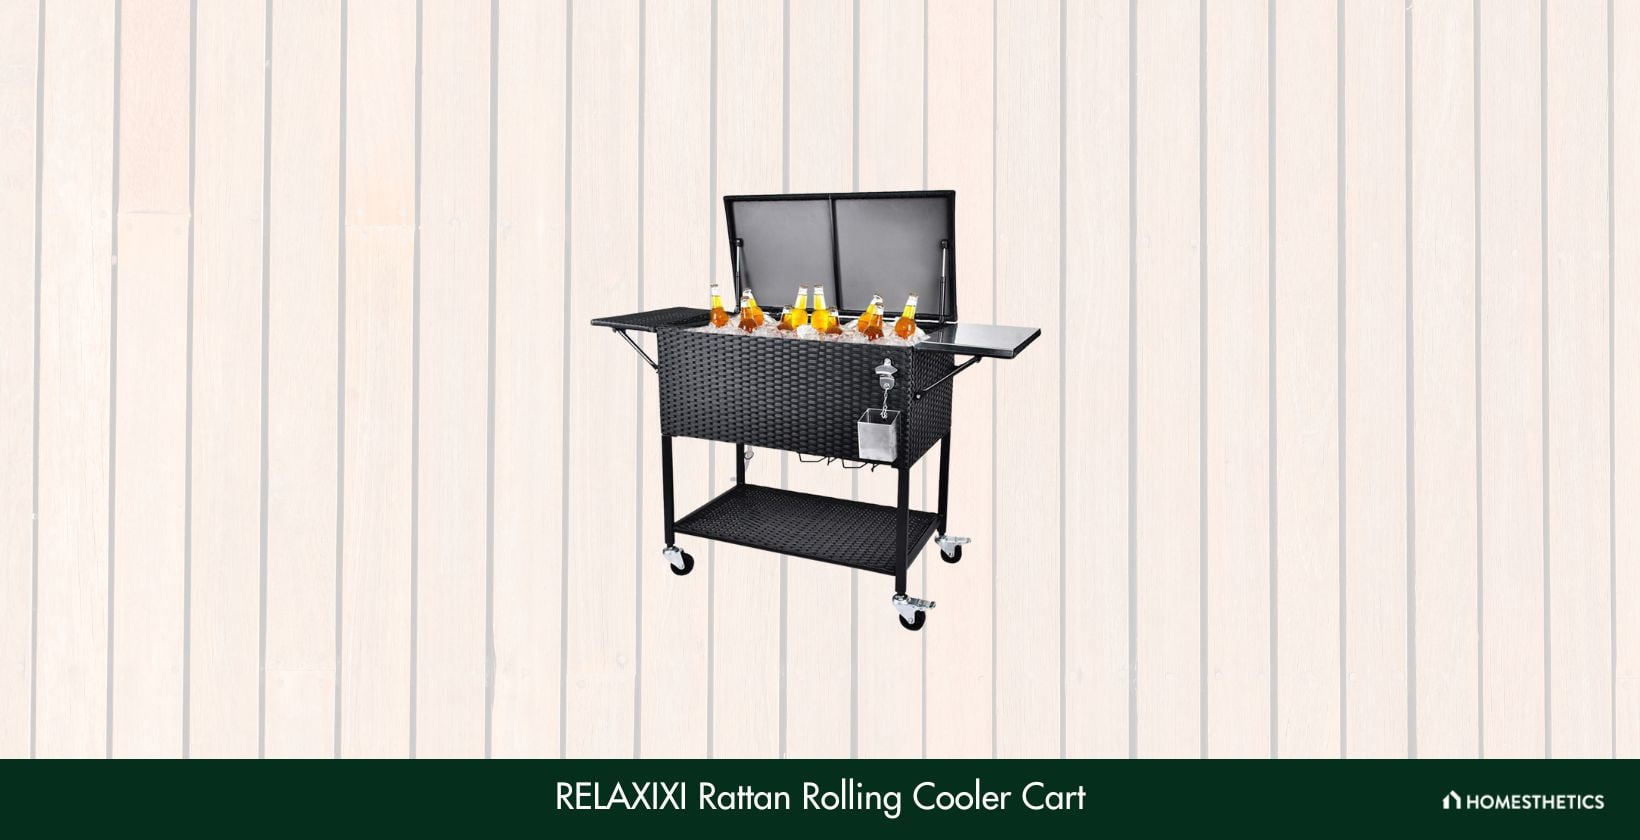 RELAXIXI Rattan Rolling Cooler Cart